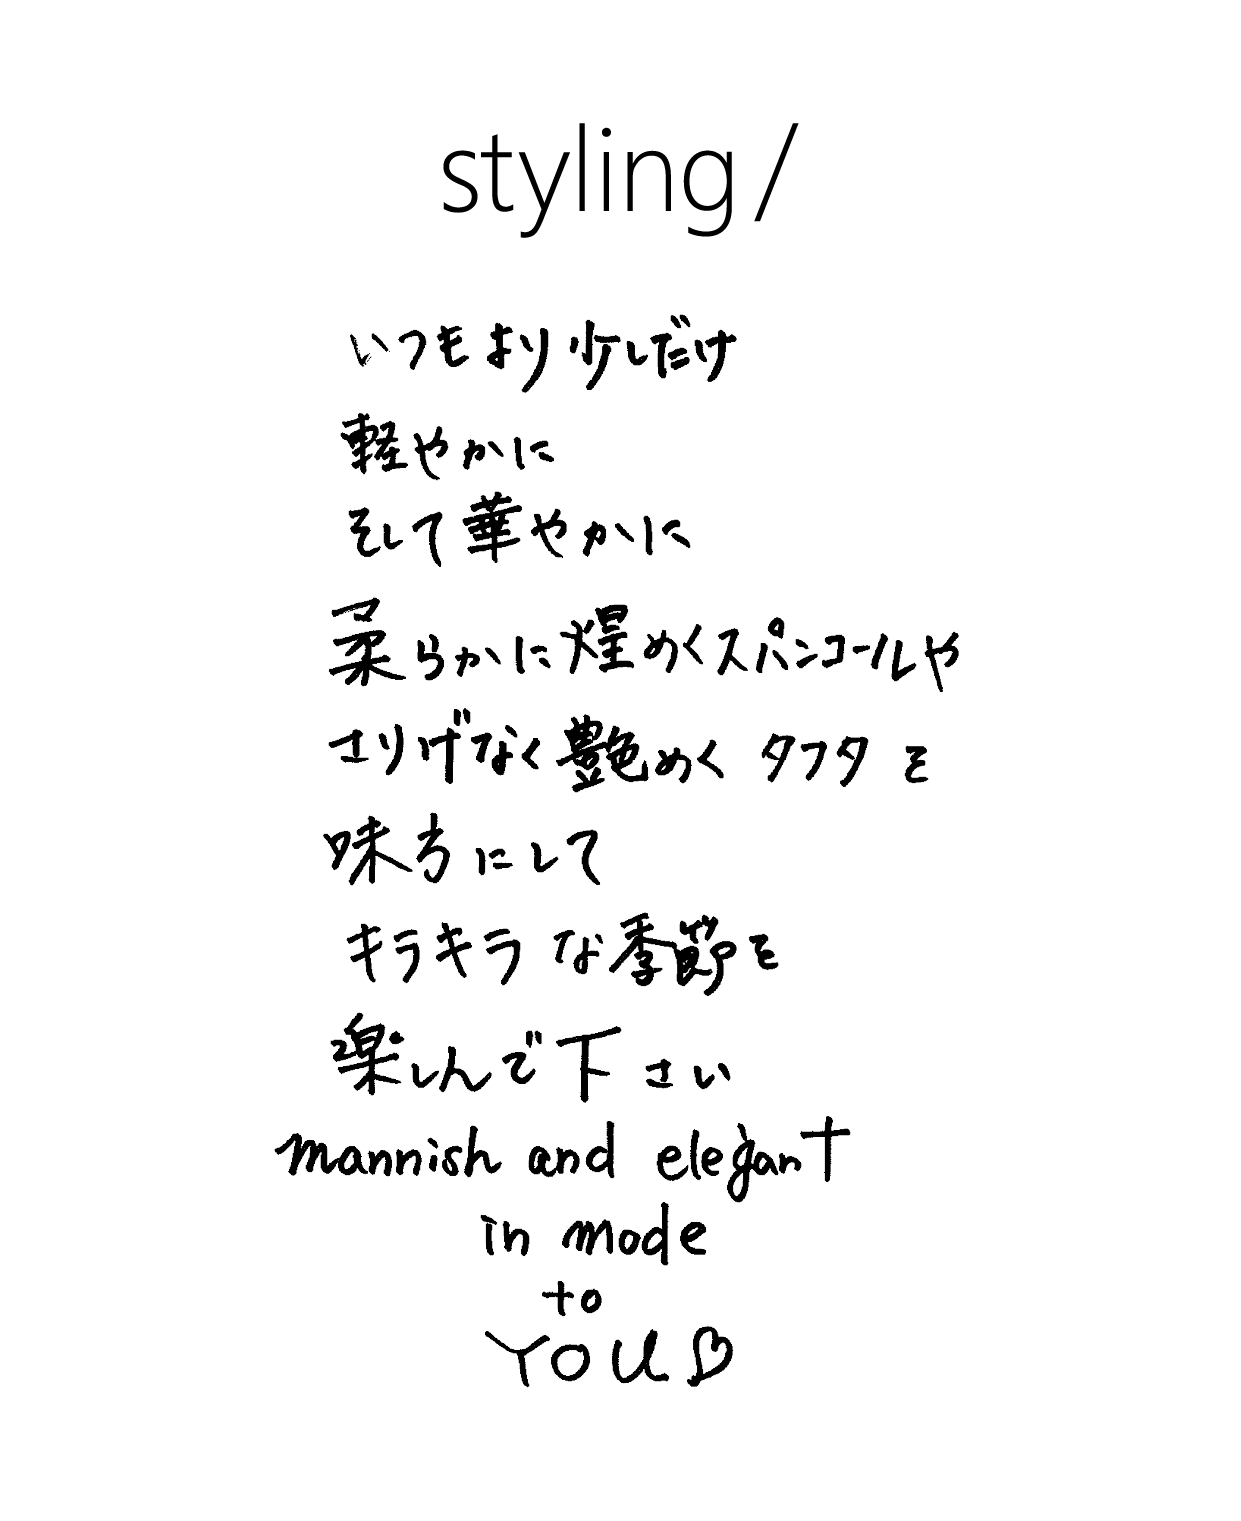 styling/